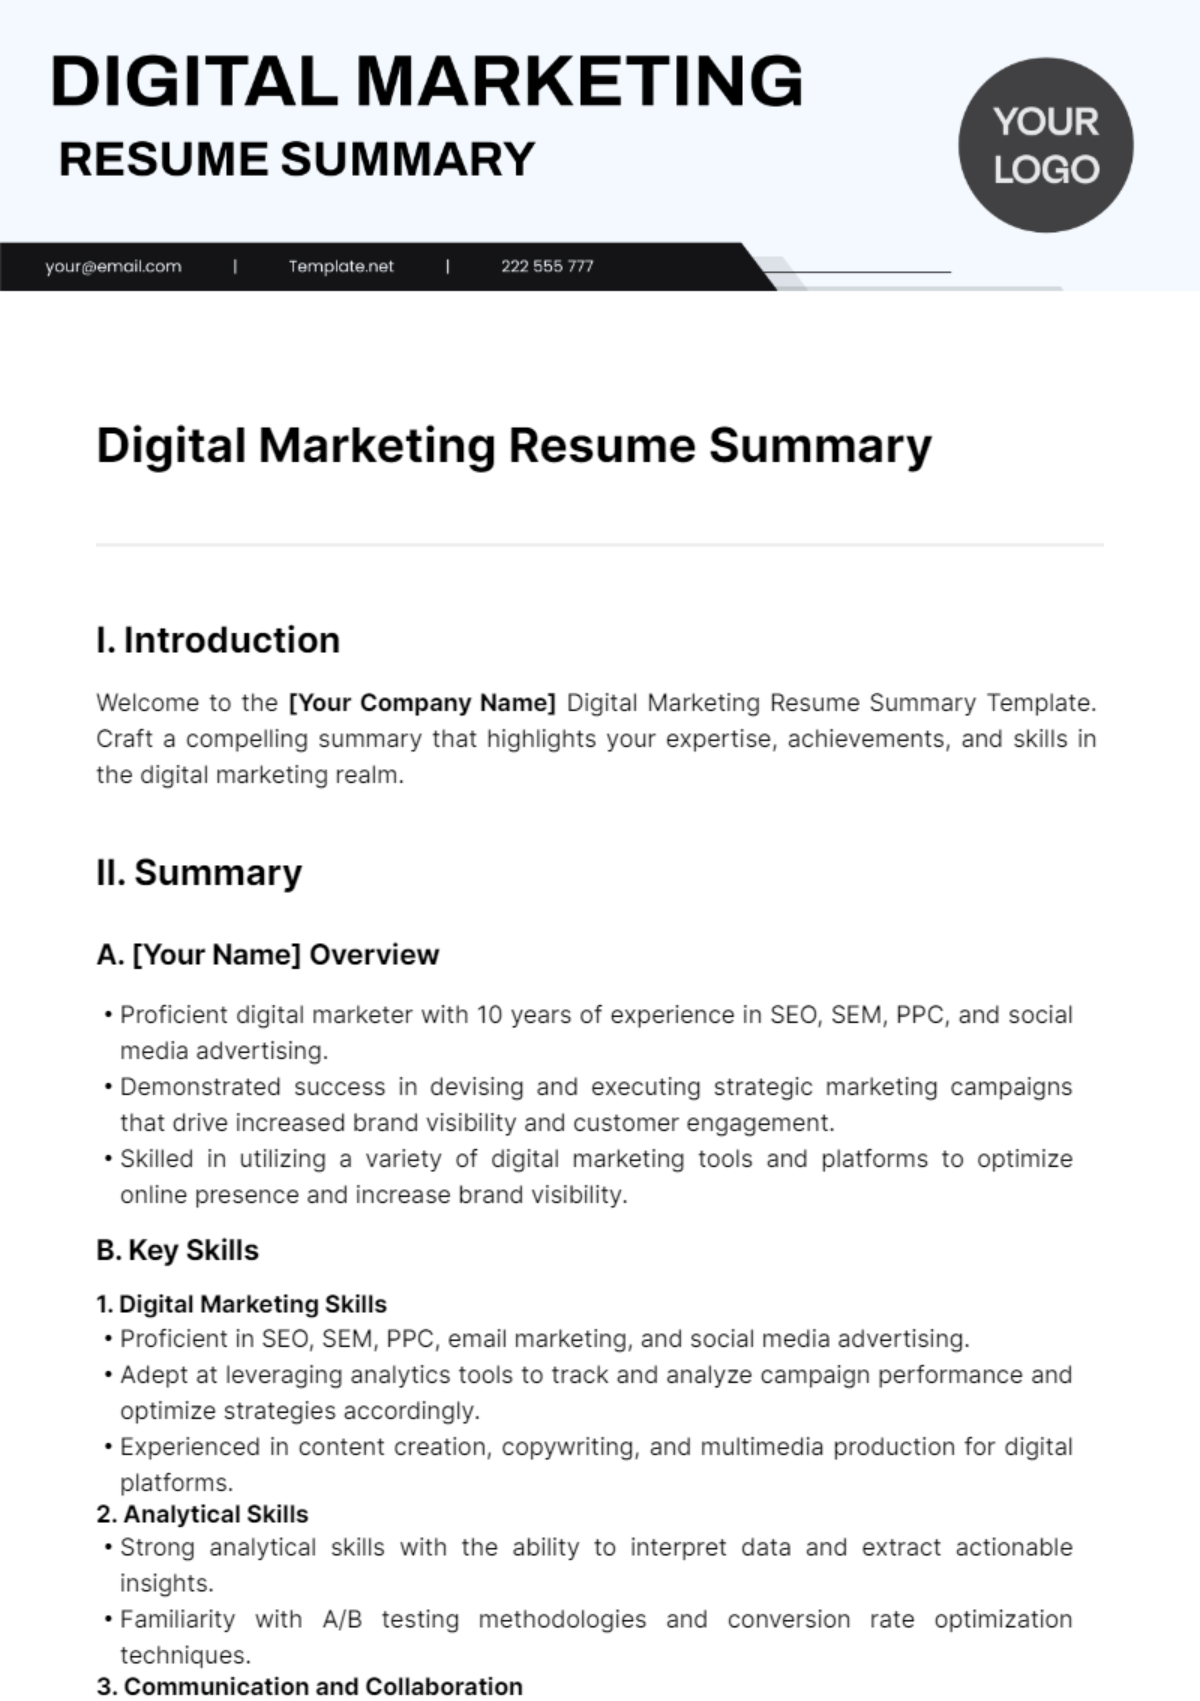 Digital Marketing Resume Summary Template